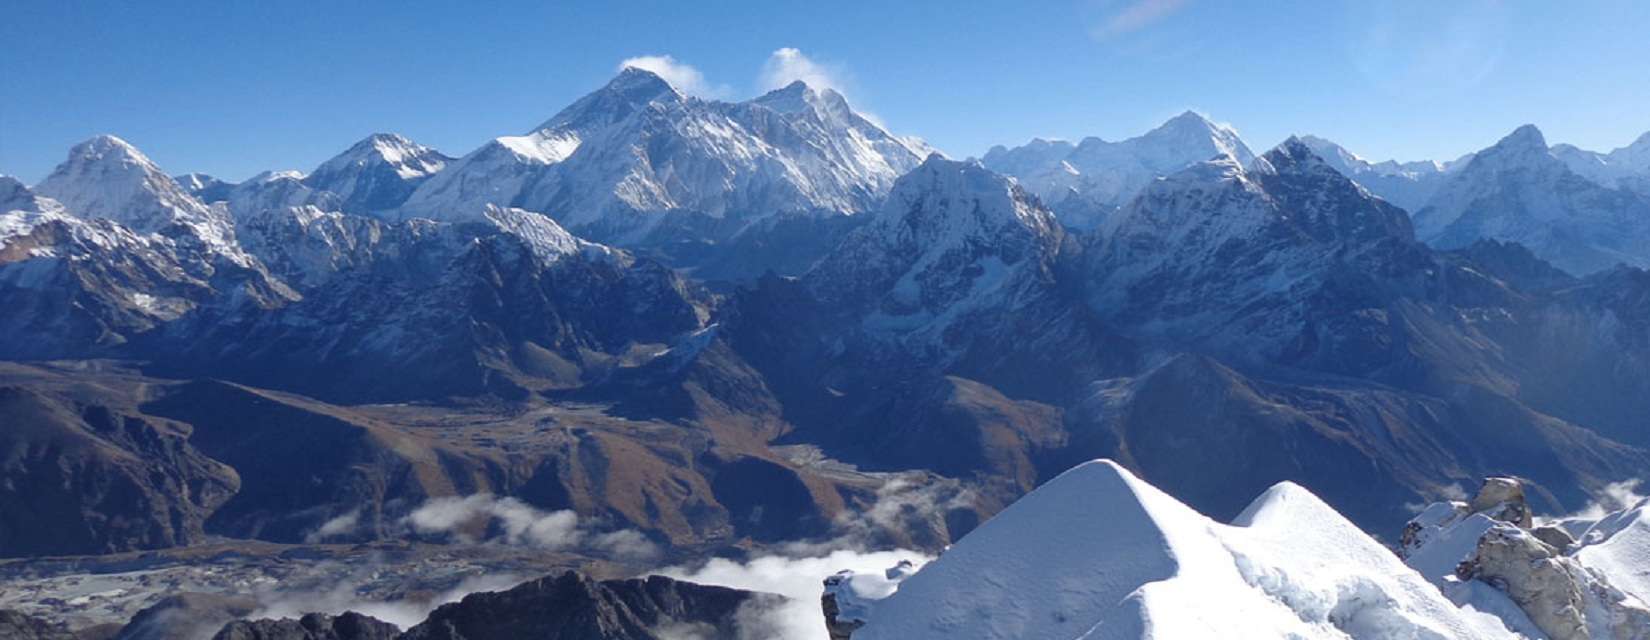 World 8 Highest Peaks in Nepal